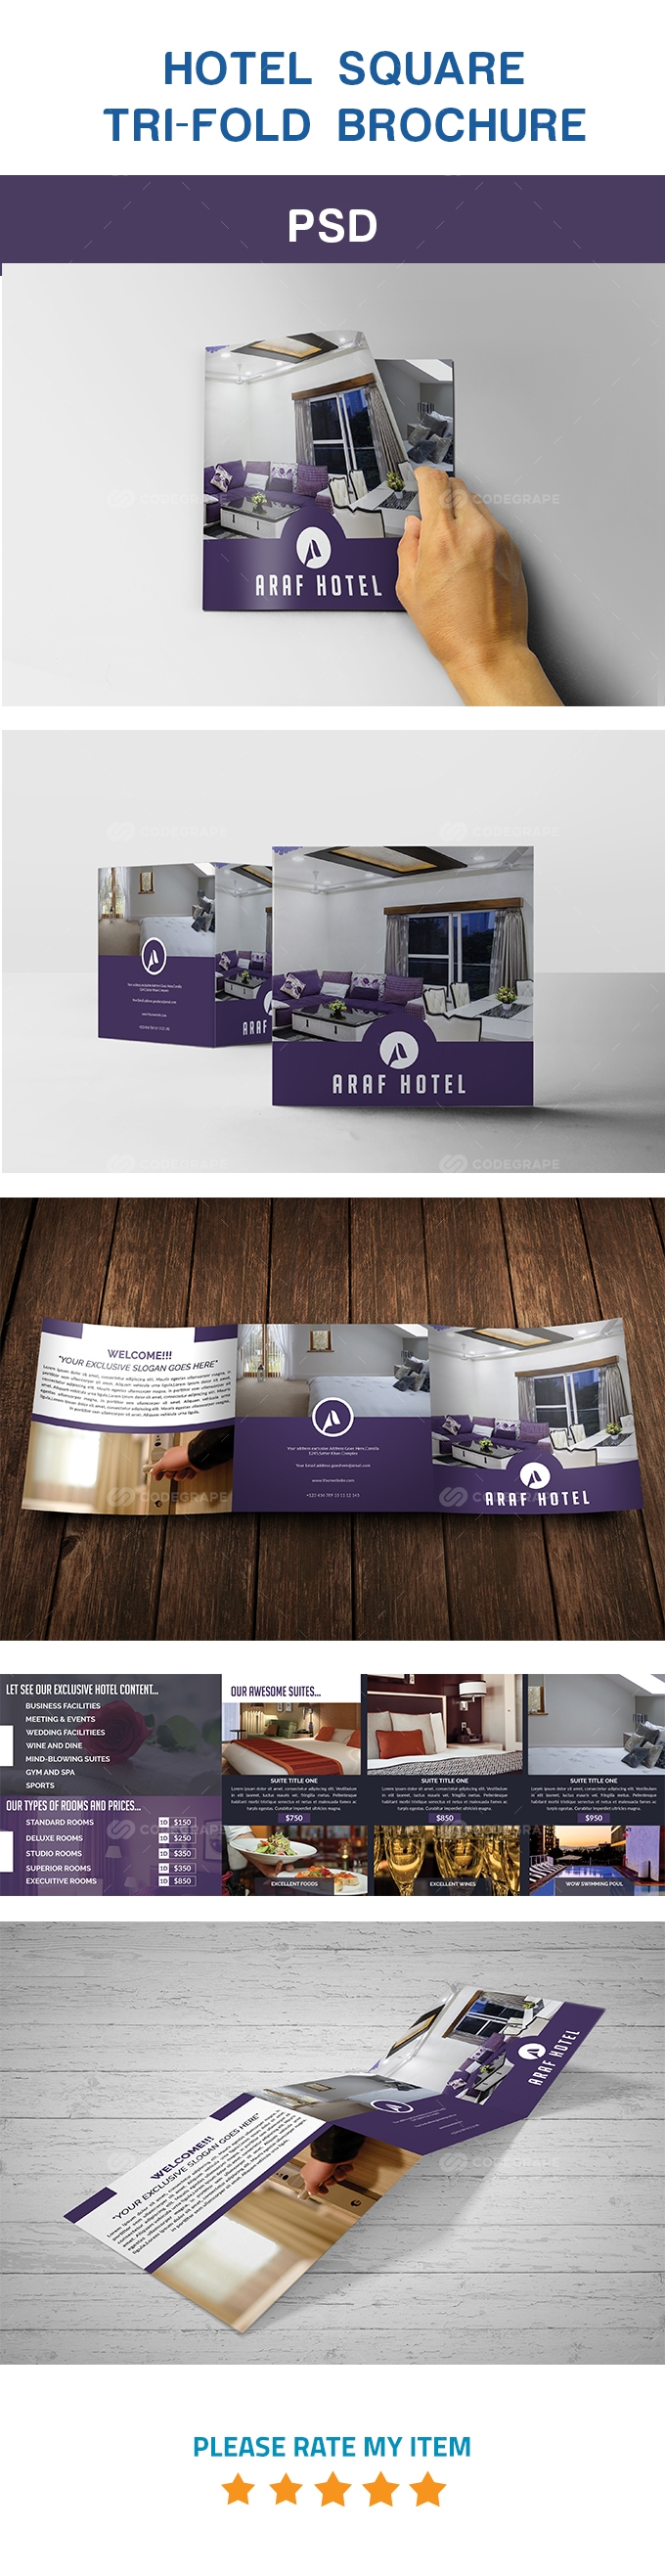 Tri-Fold Brochure Template Hotel Square